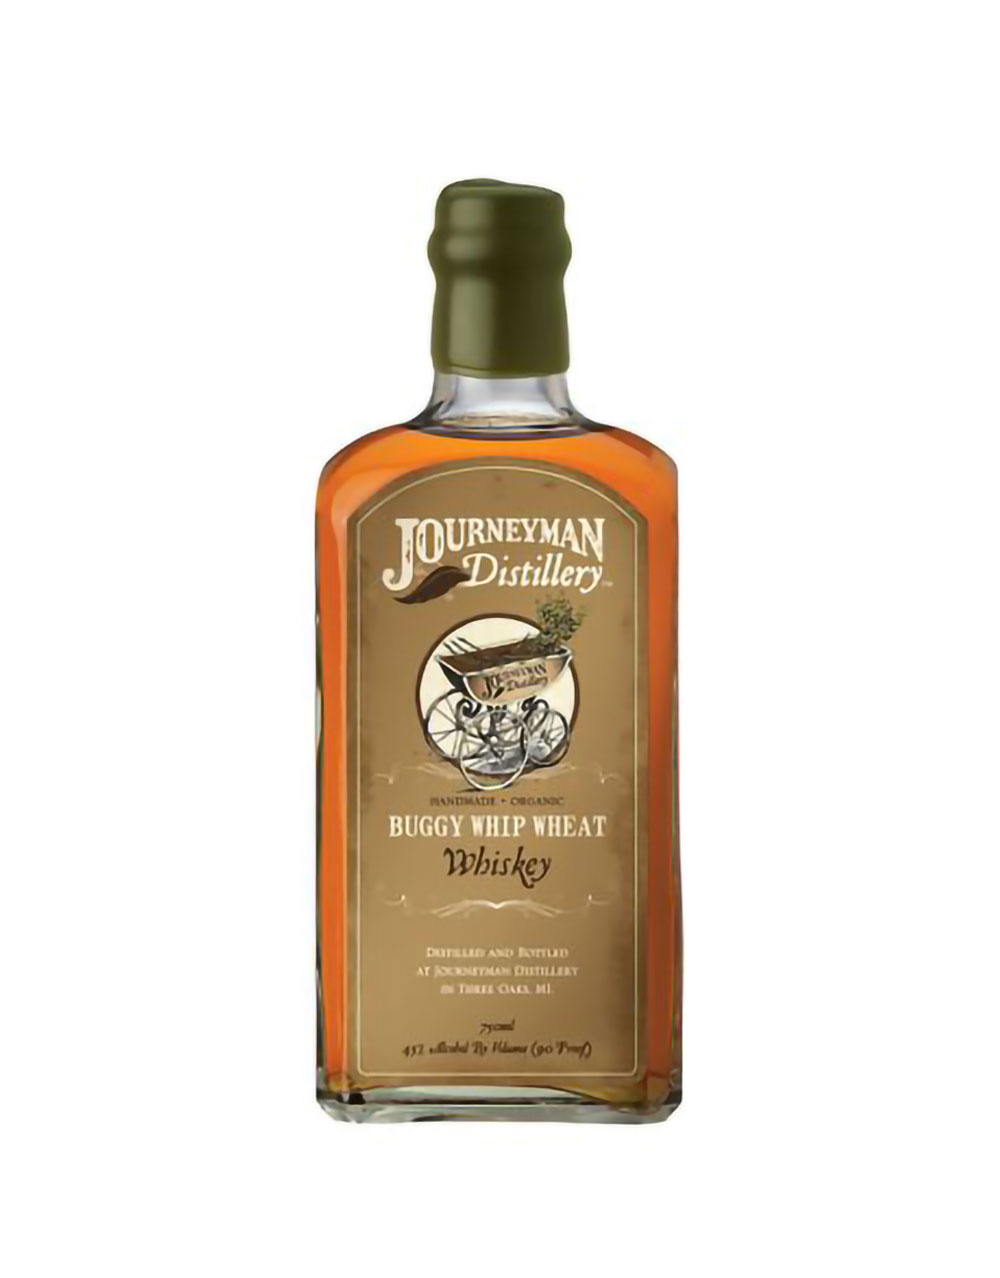 Journeyman Whiskey Buggy Whip Wheat Whiskey